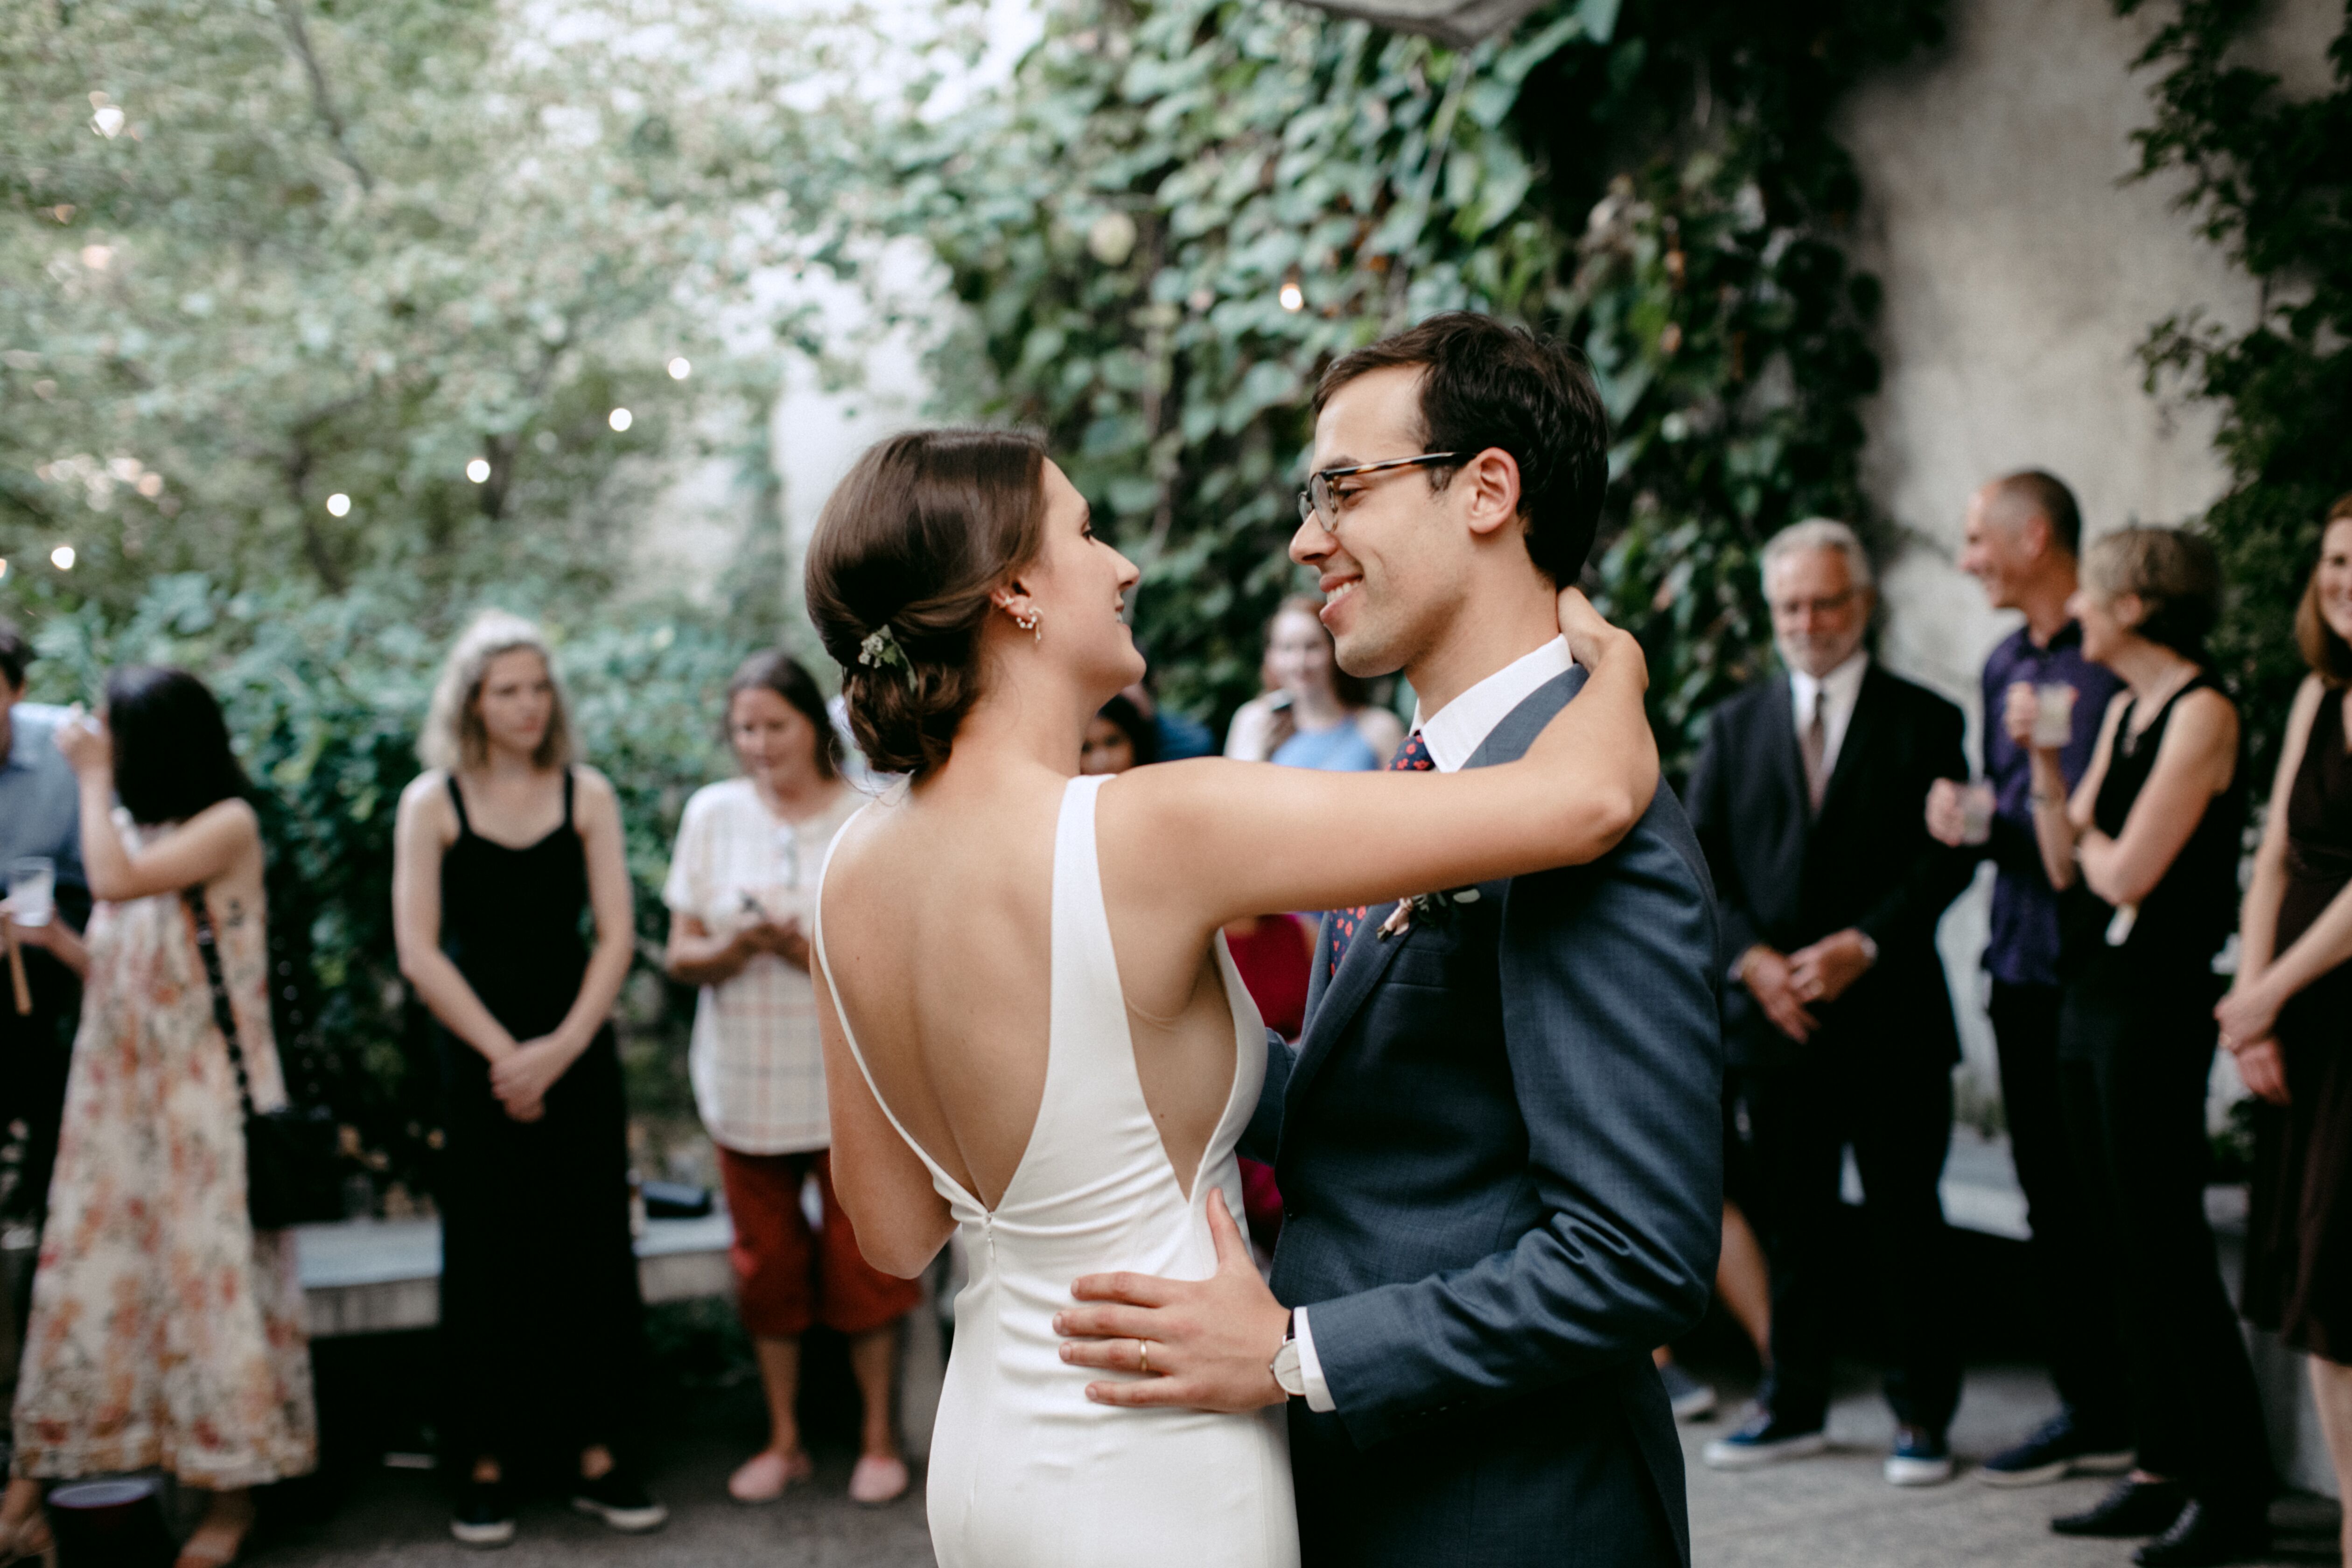 J.FLYNN | Wedding Photographers - The Knot